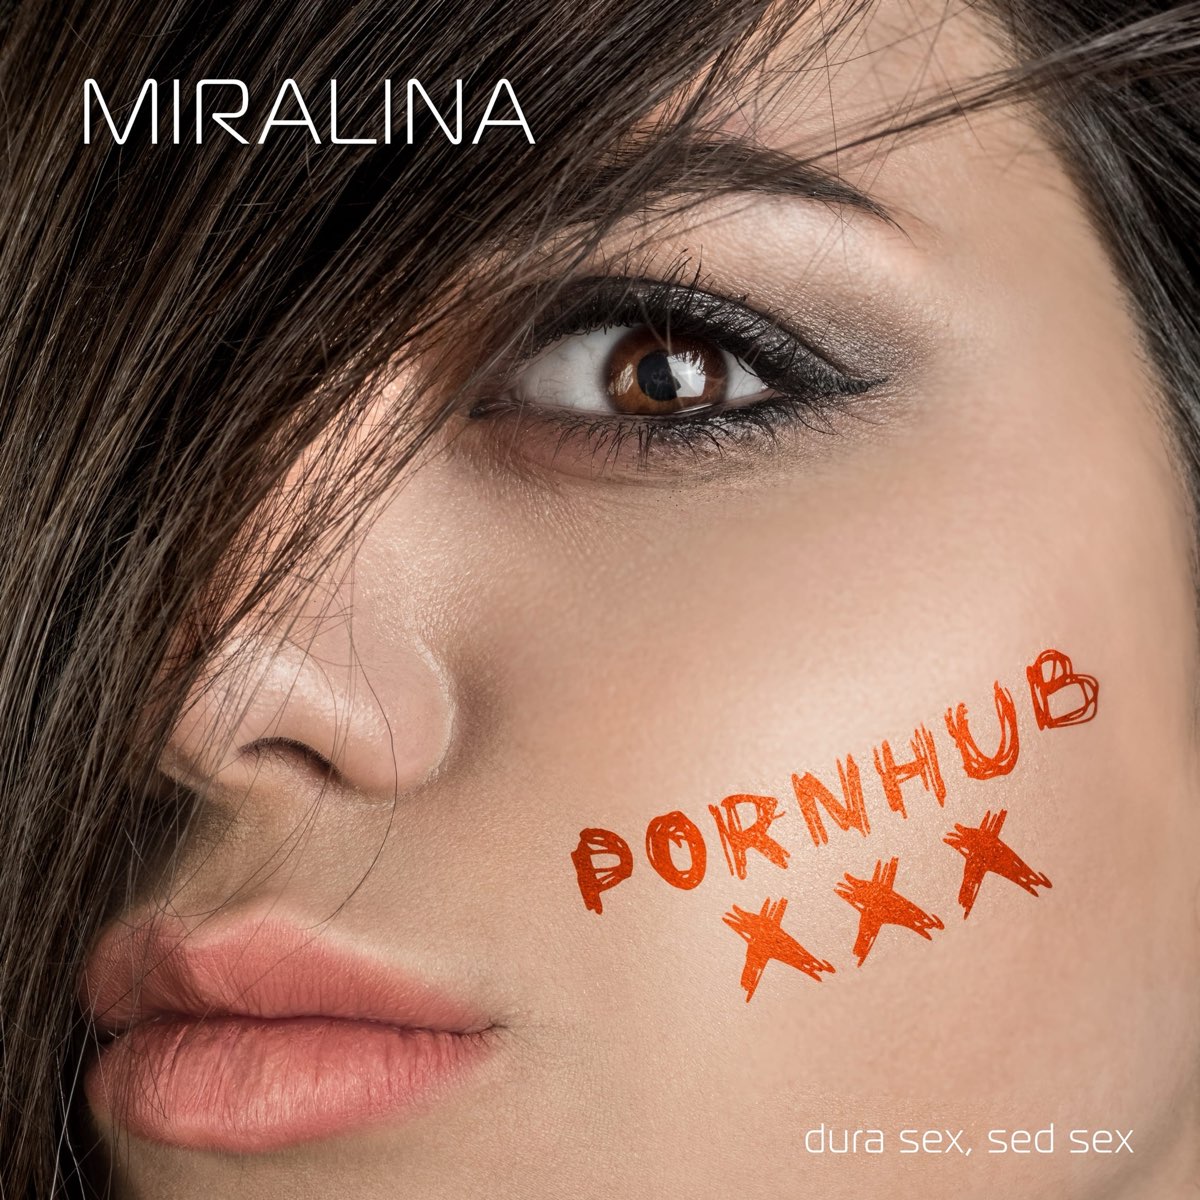 Pornht Xxx Com - Pornhub XXX - Single by Miralina on Apple Music